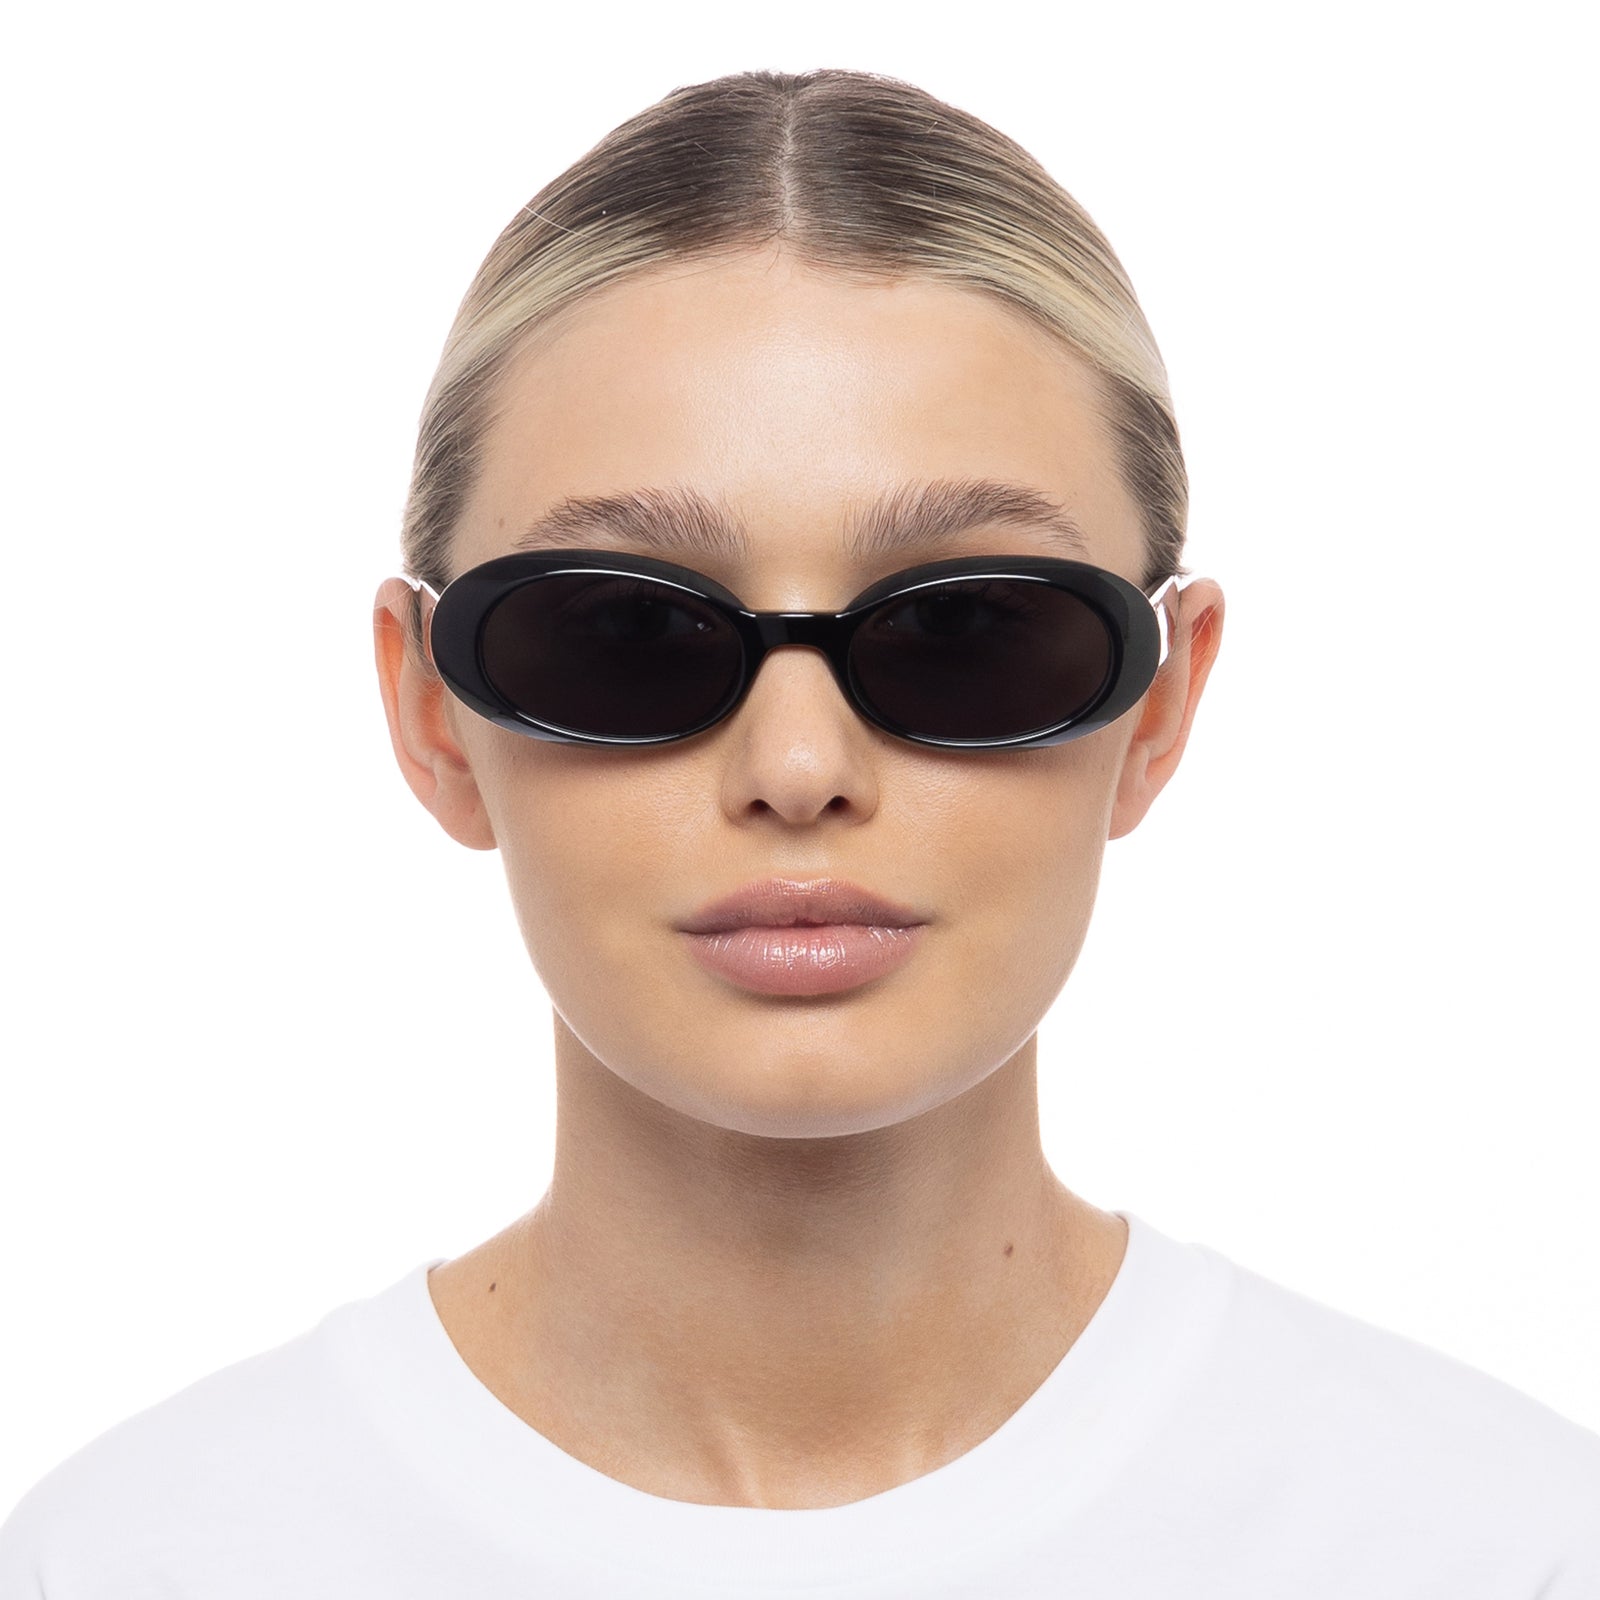 Le | Uni-Sex Black Specs Oval Work It! Sunglasses